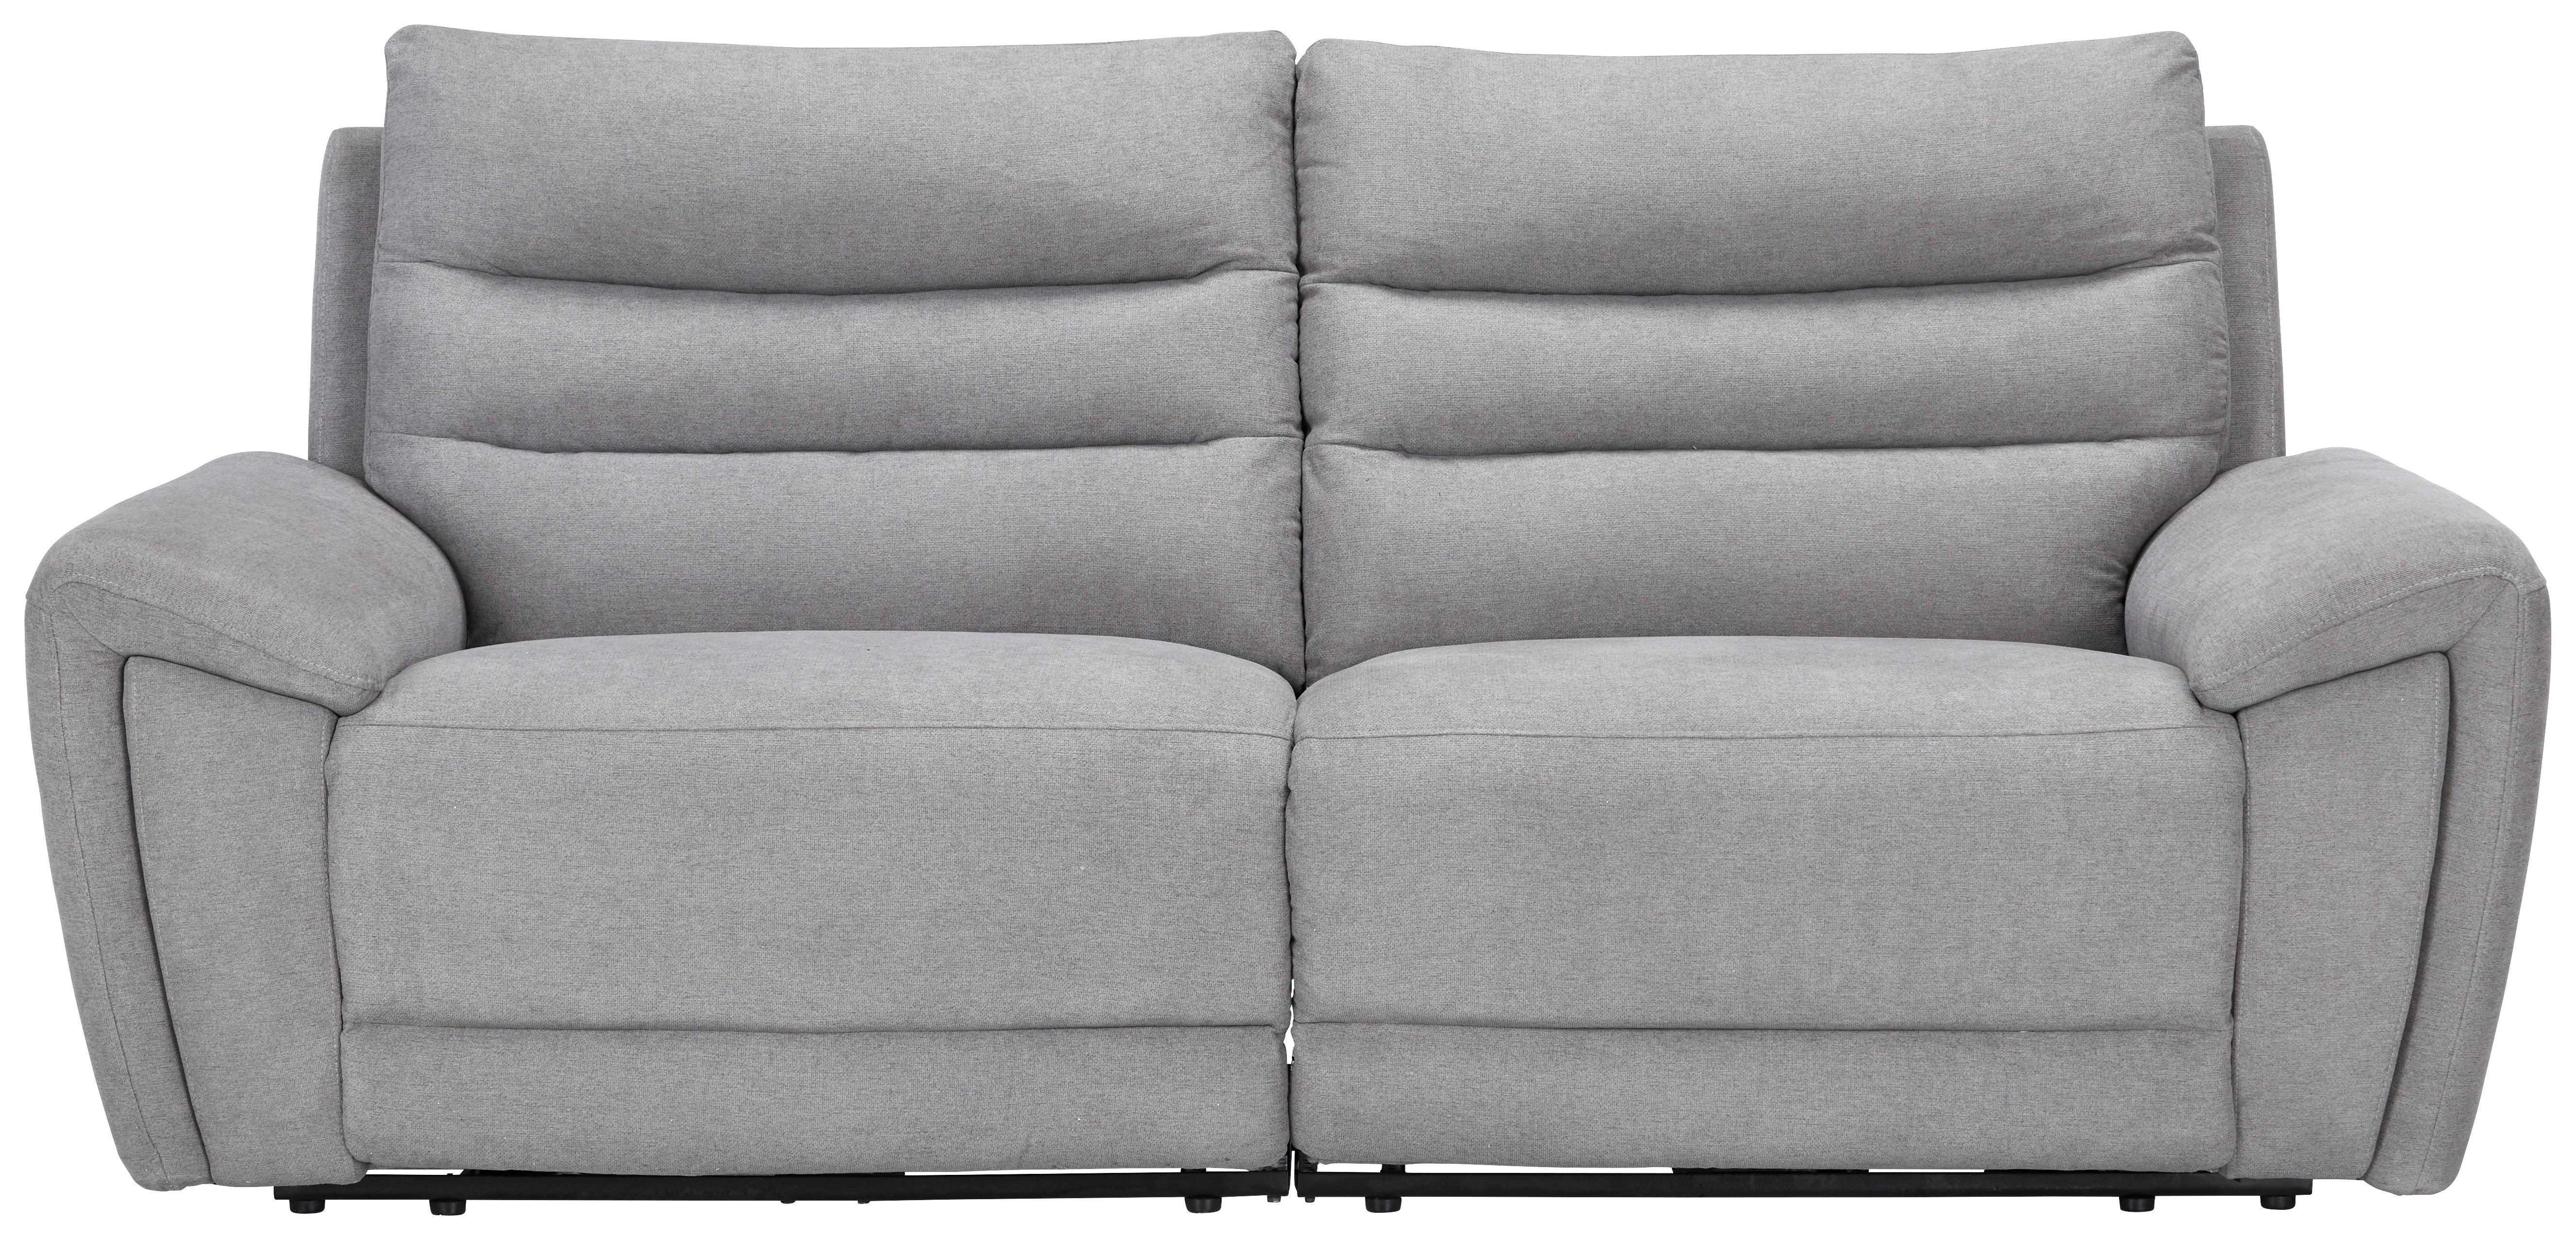 Sofa in Grau mit Relaxfunktion - Schwarz/Grau, Konventionell, Holz/Textil (213/100/94cm) - Modern Living